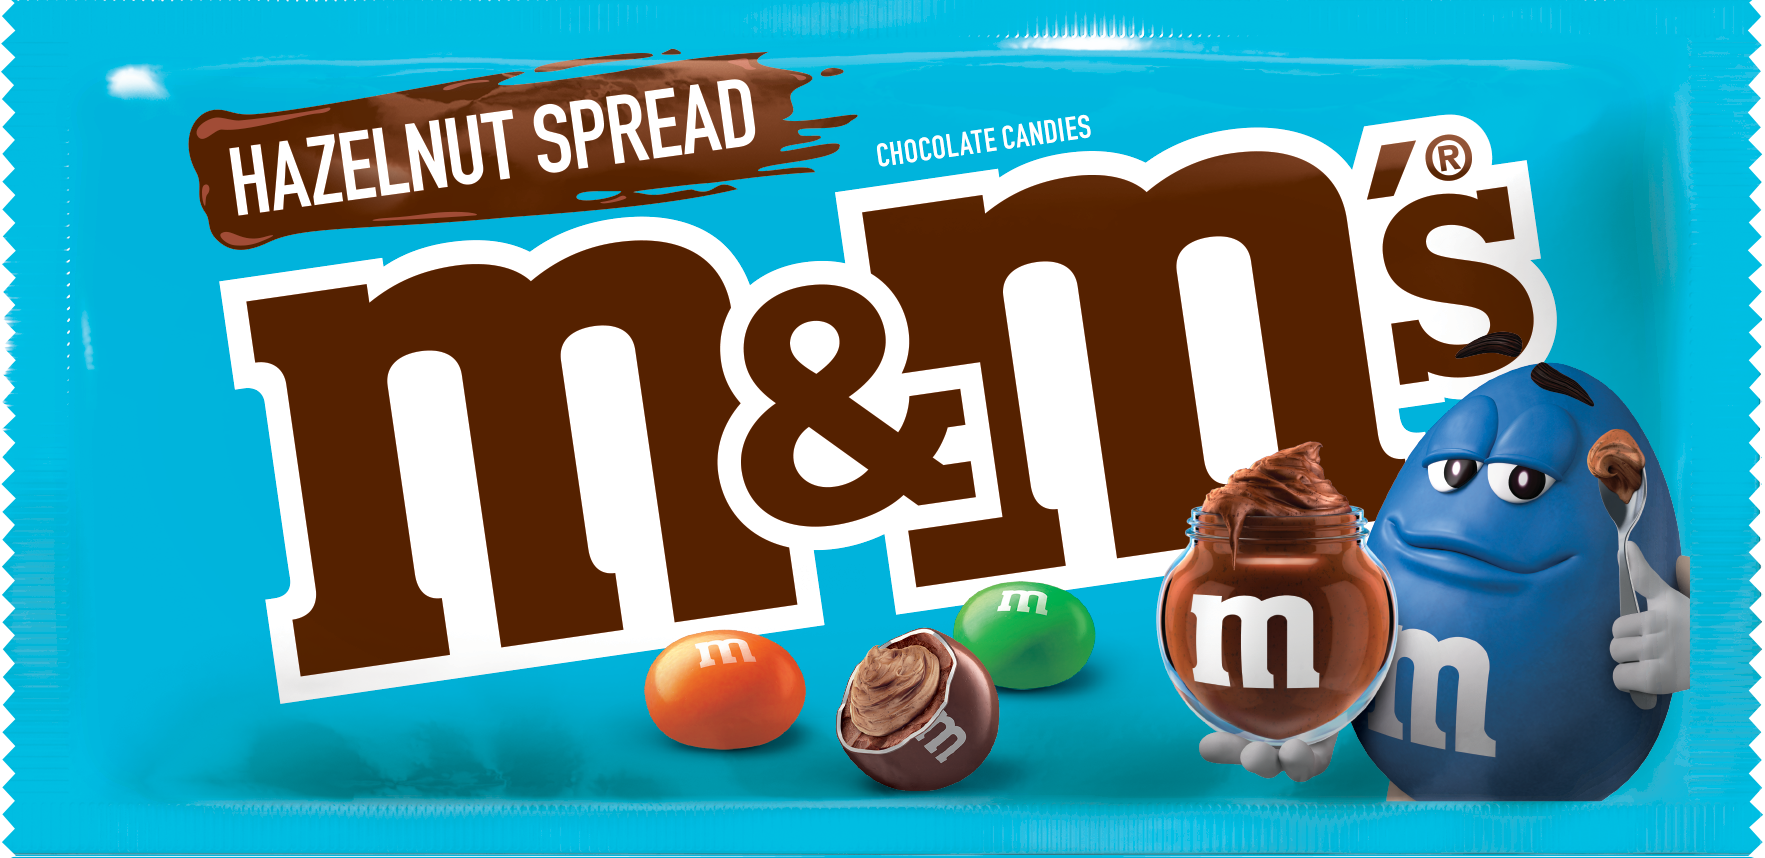 M&M's Hazelnut Spread Chocolate Candies 1.35 oz. Bags - 24 / Box